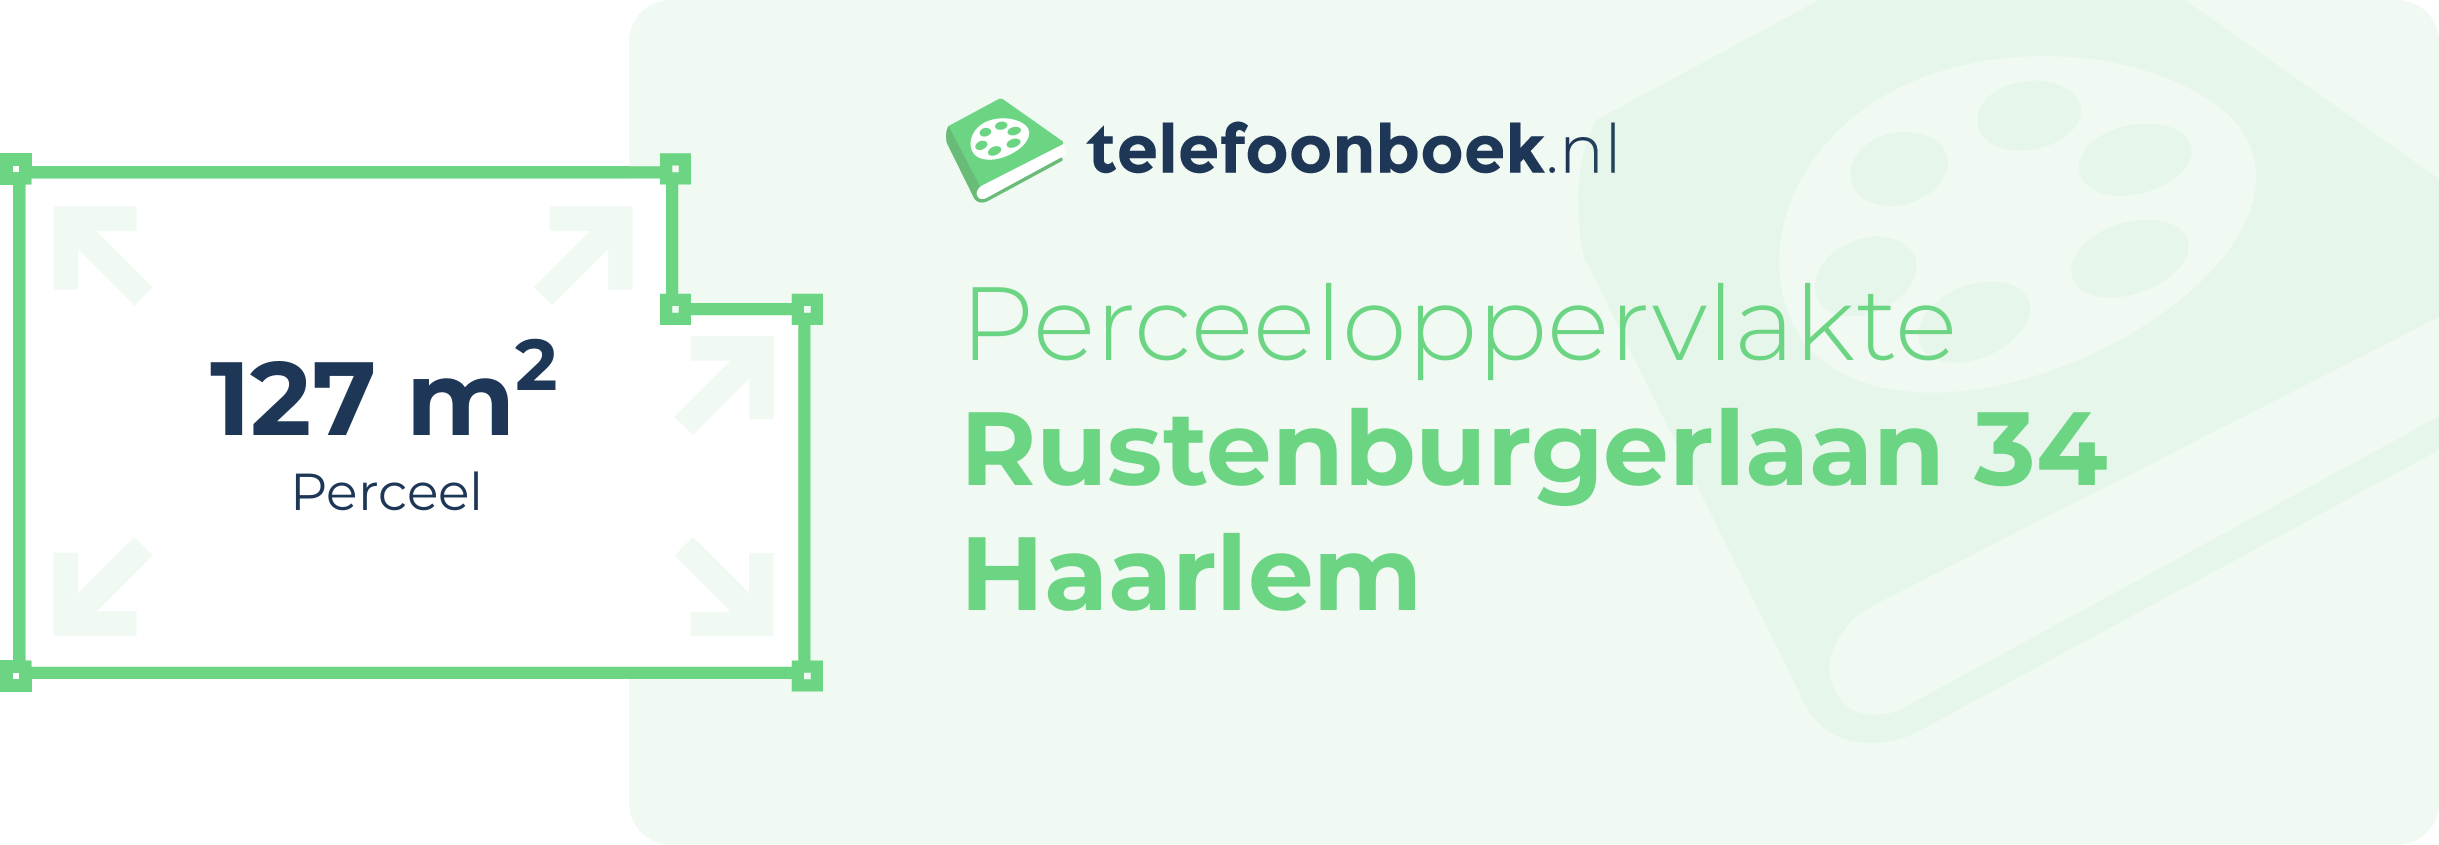 Perceeloppervlakte Rustenburgerlaan 34 Haarlem